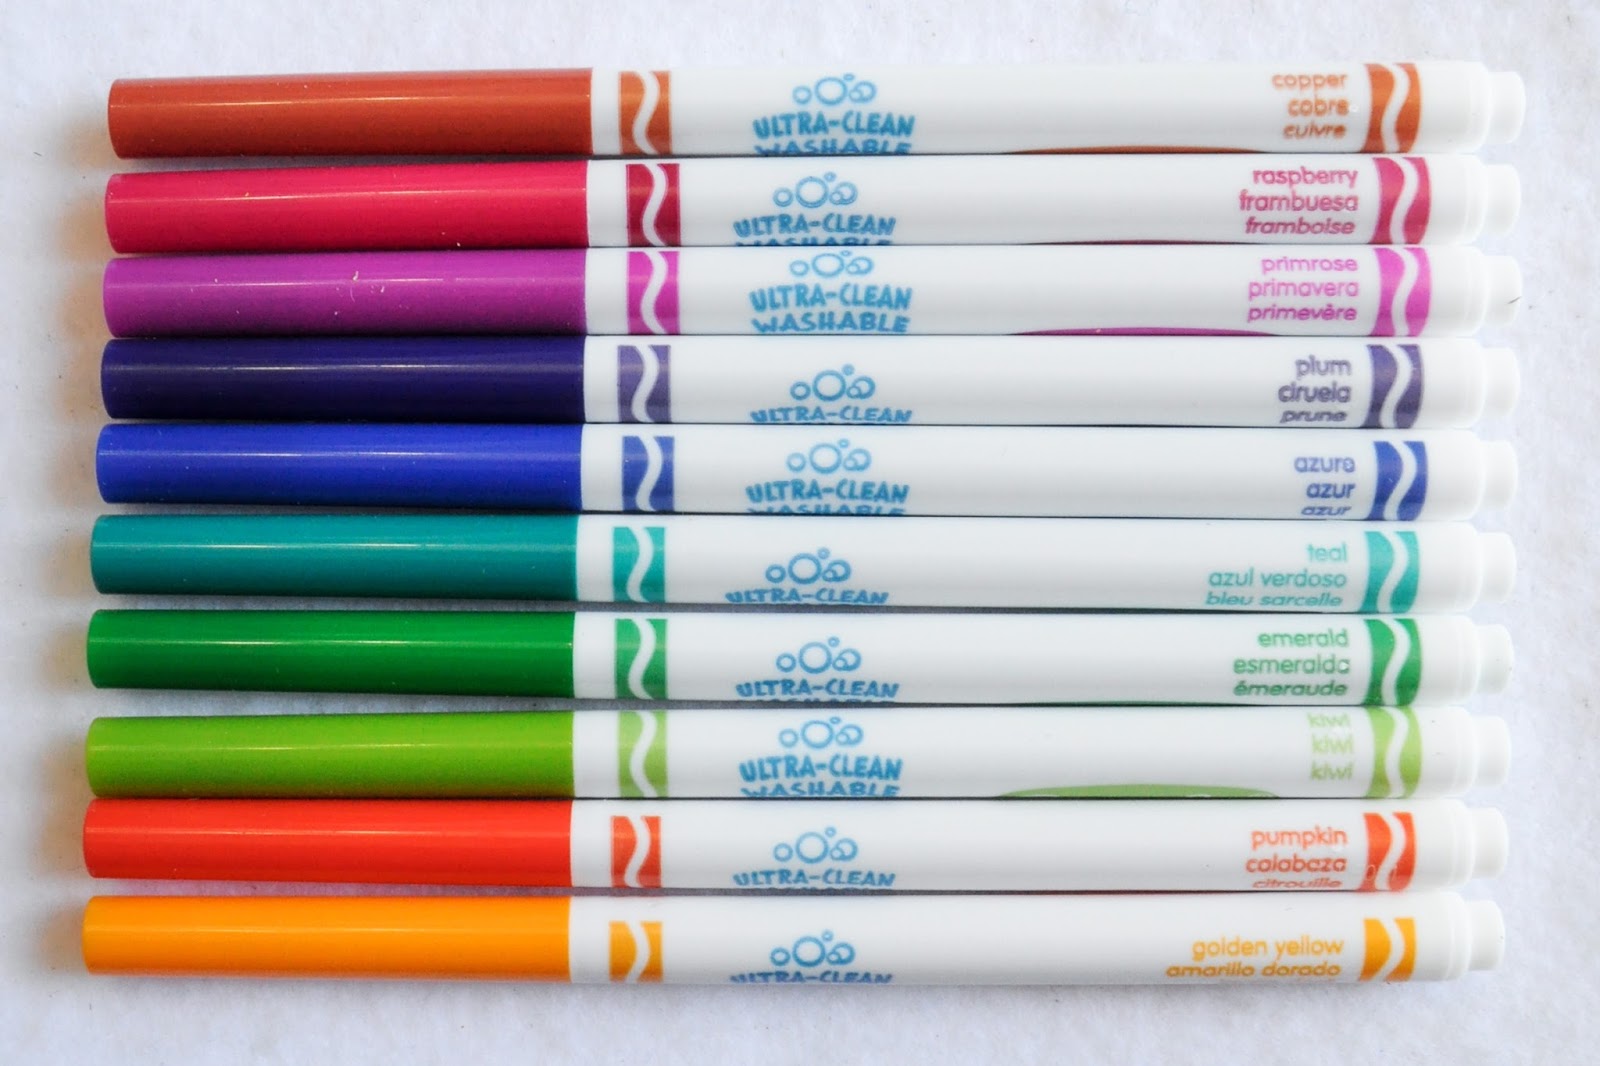 Crayola Made Brush Markers!